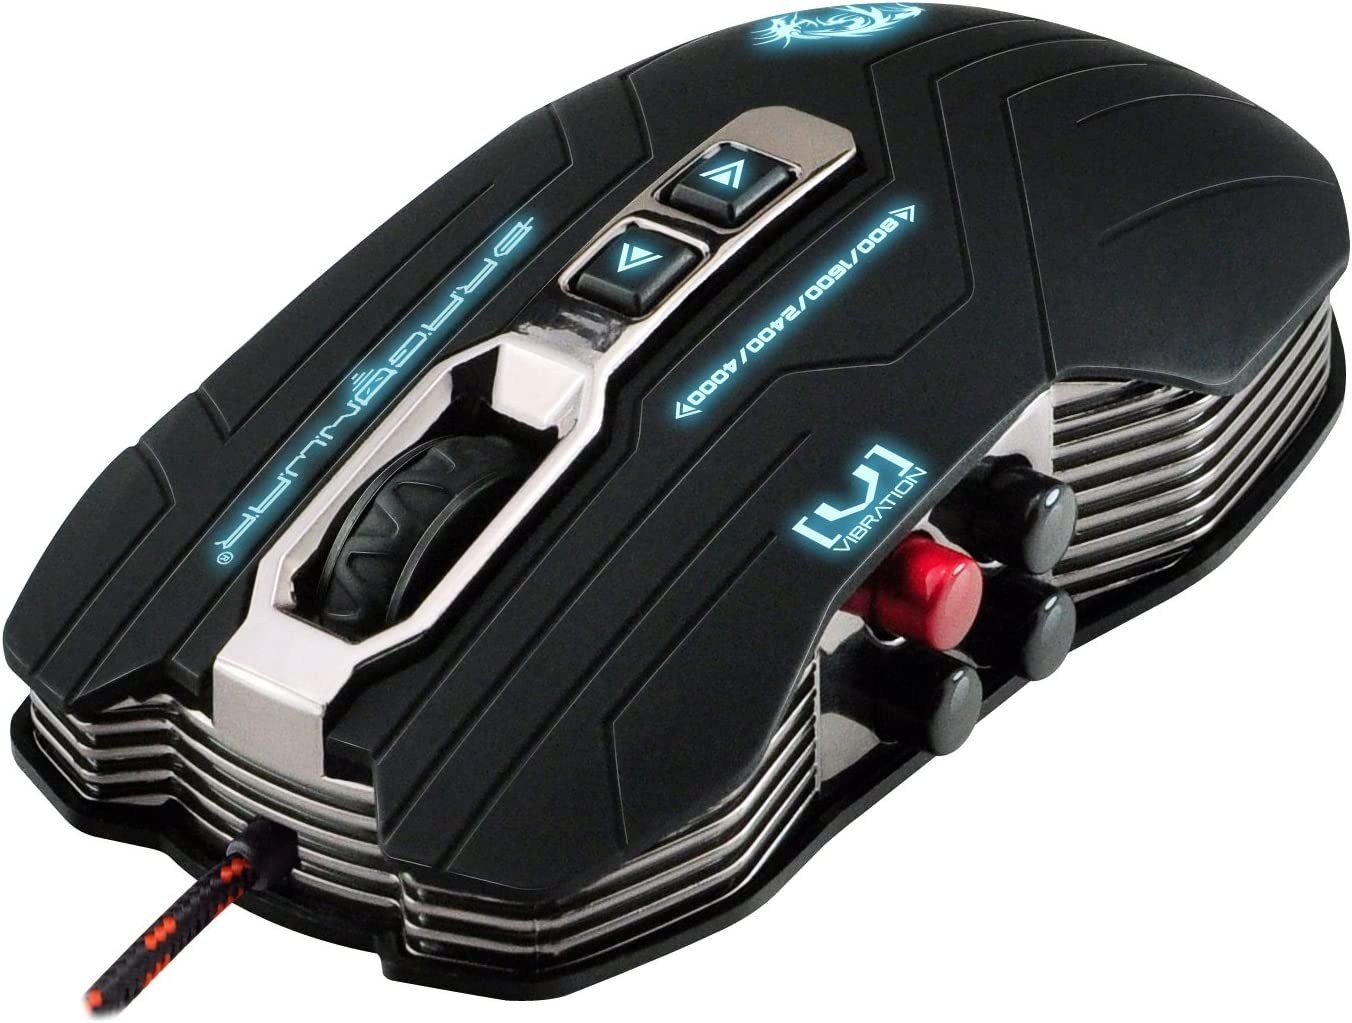 RAZEAK Ultra Custom Wireless Gaming Mouse Syww 8, Gaming Mouse